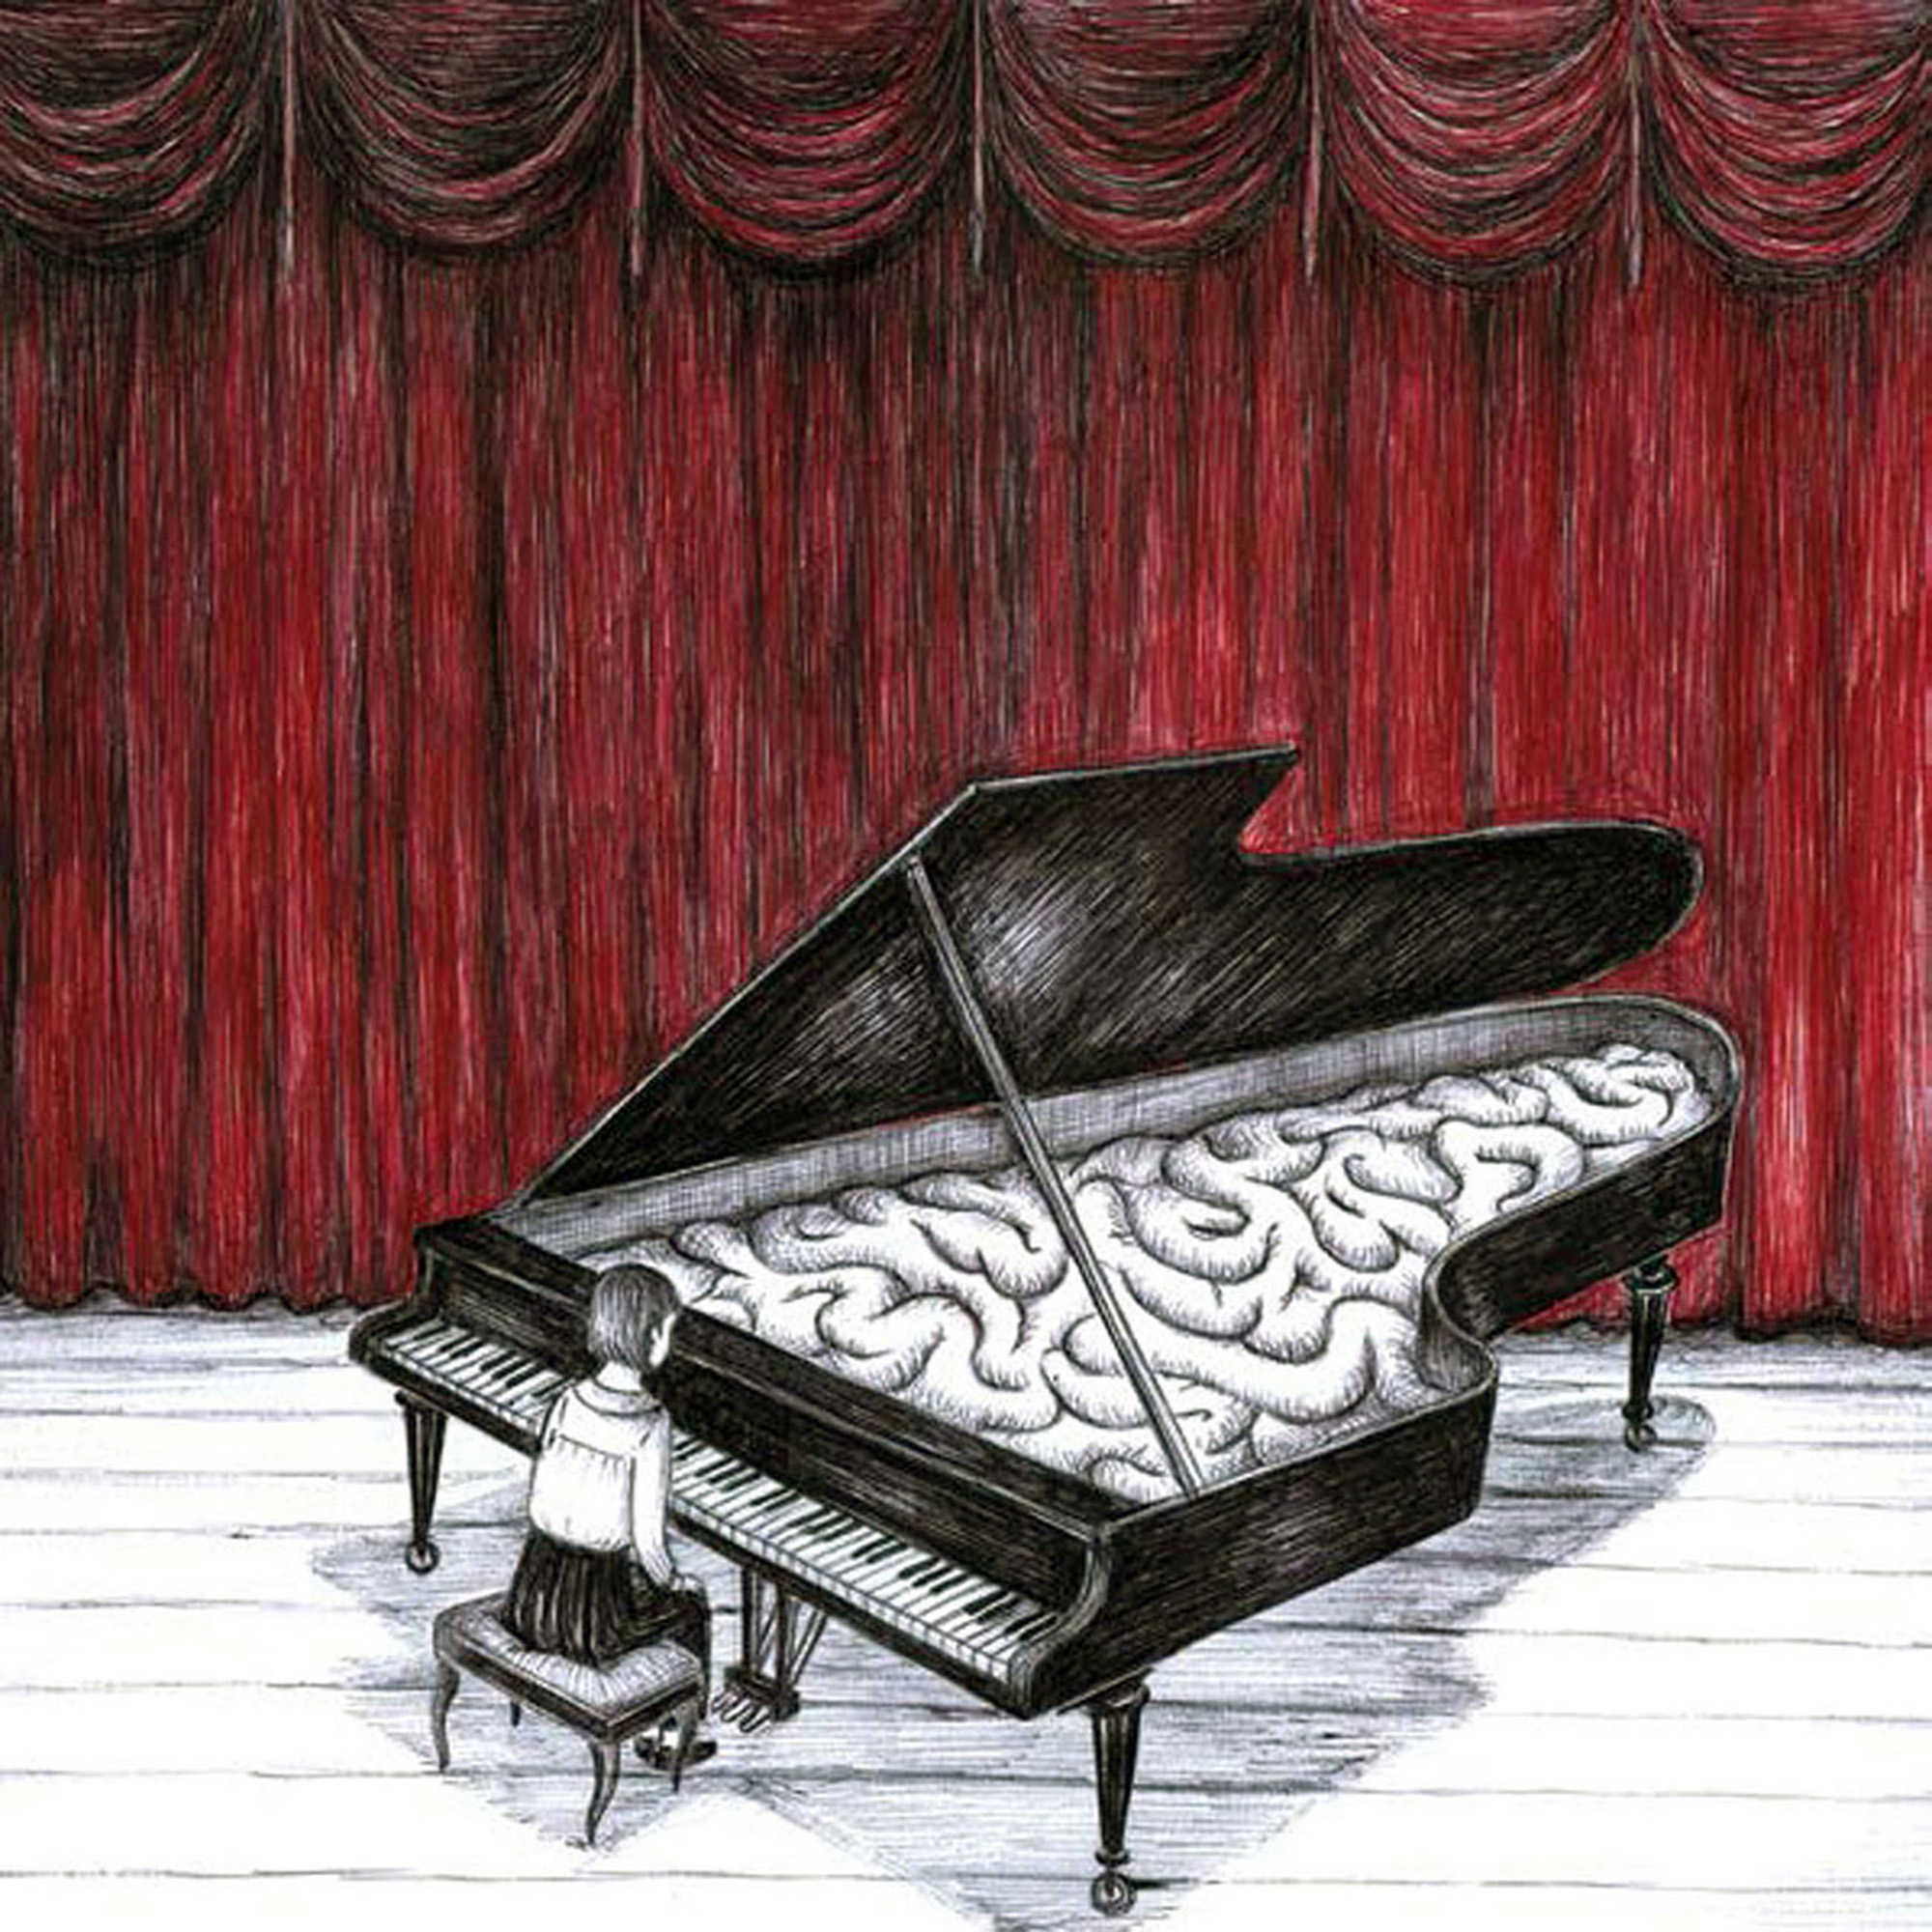 Virginia Mori, La pianista, Penna bic su carta, 2016, 30x21cm